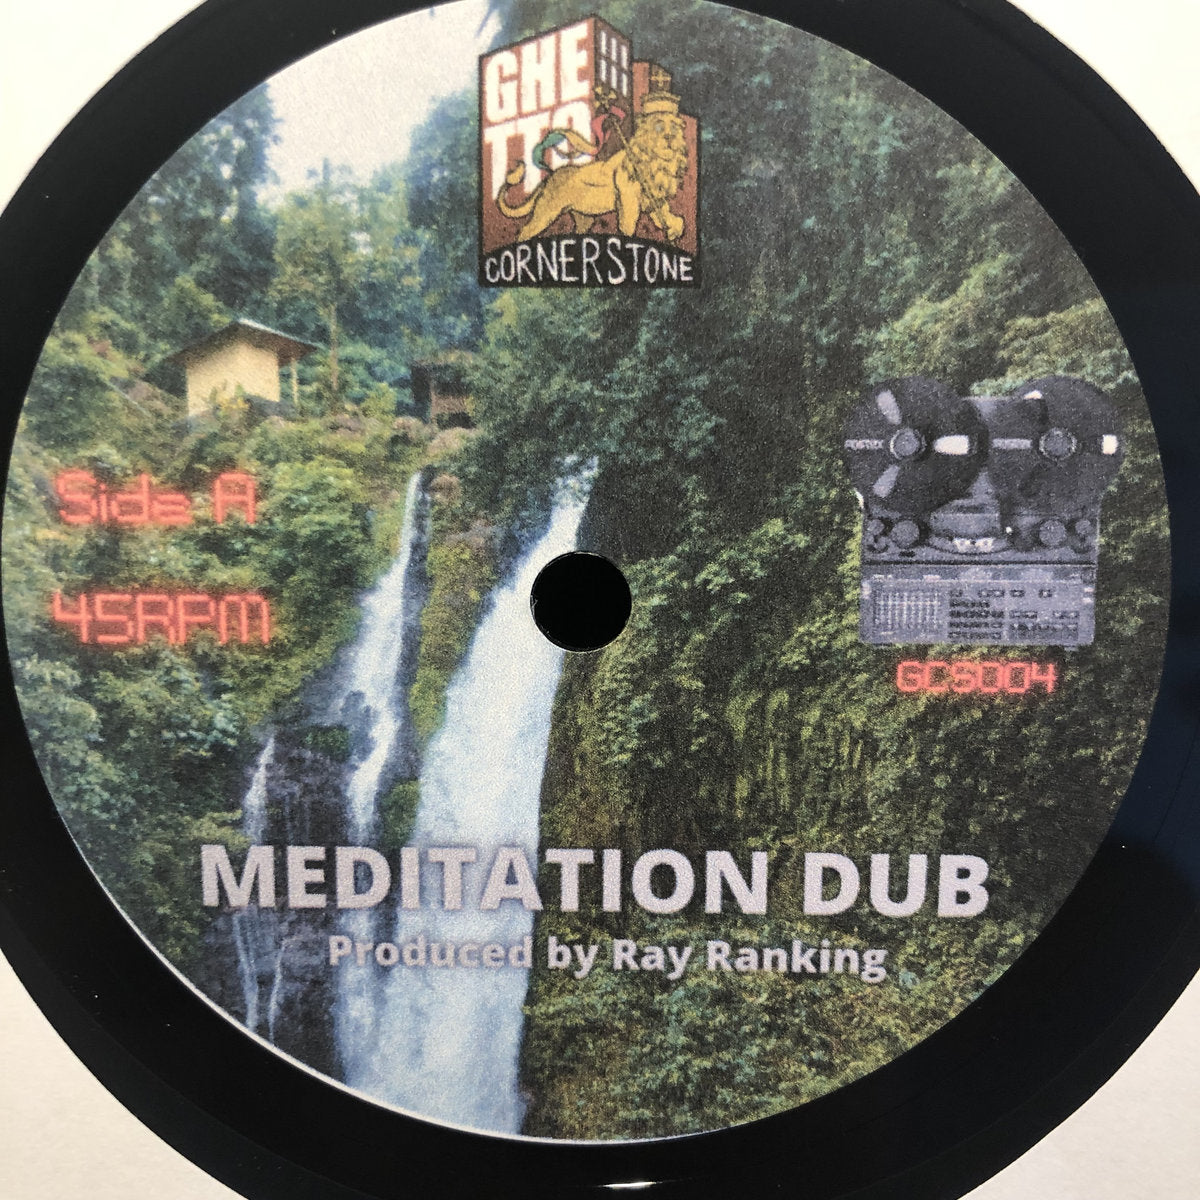 Meditation Dub by Ray Ranking